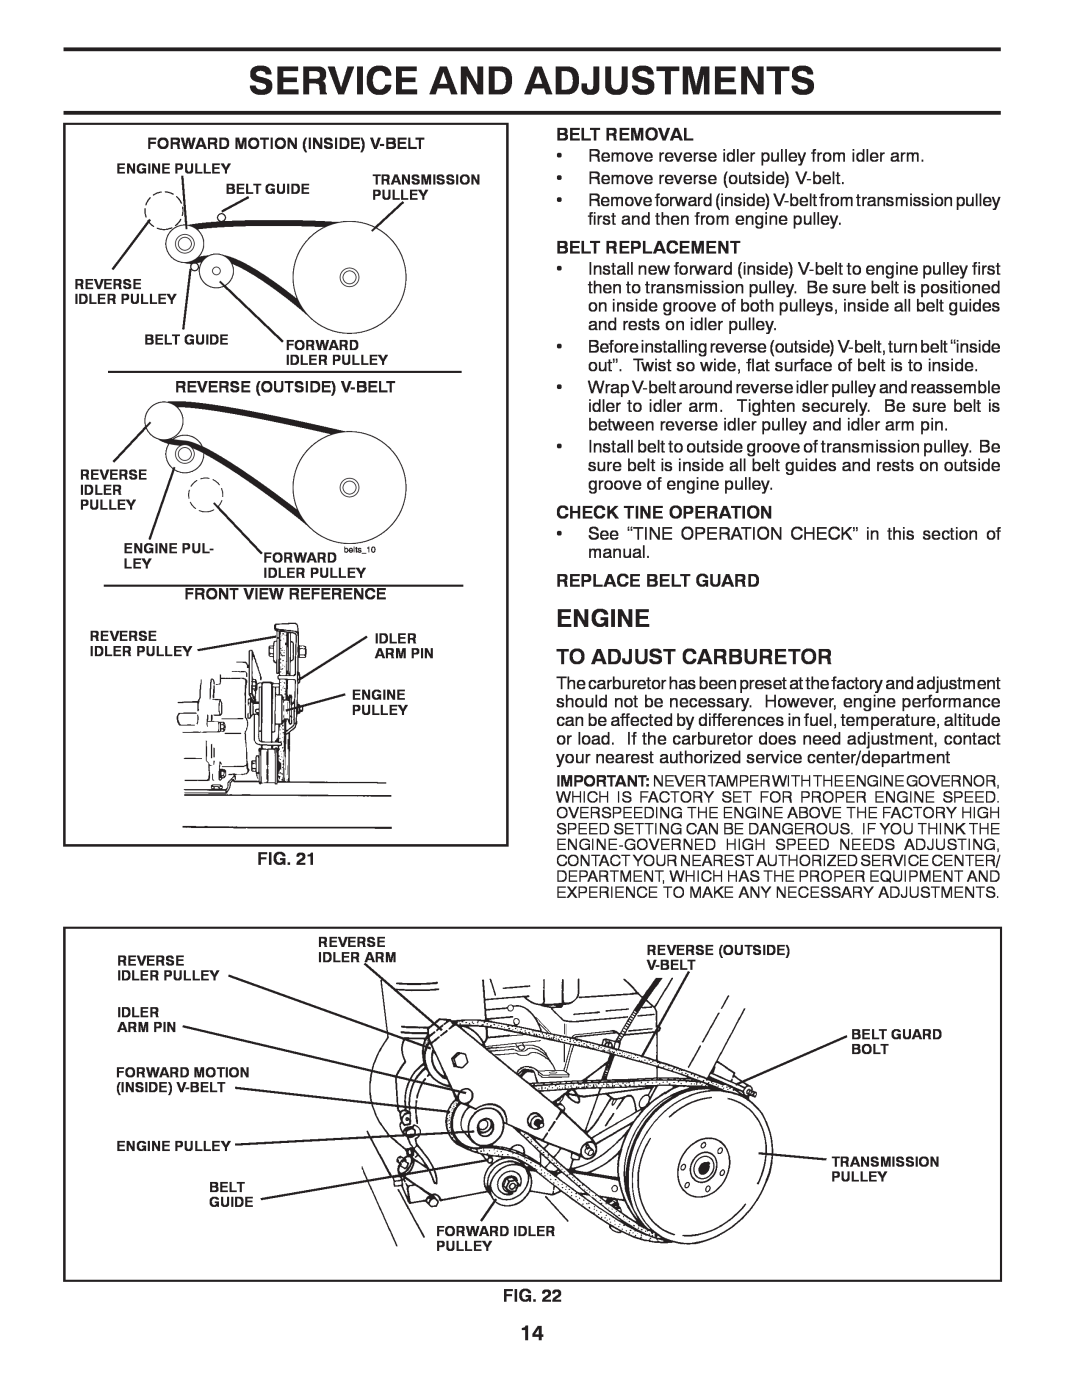 Poulan HDF825X To Adjust Carburetor, Belt Removal, Belt Replacement, Check Tine Operation, Replace Belt Guard, Engine 